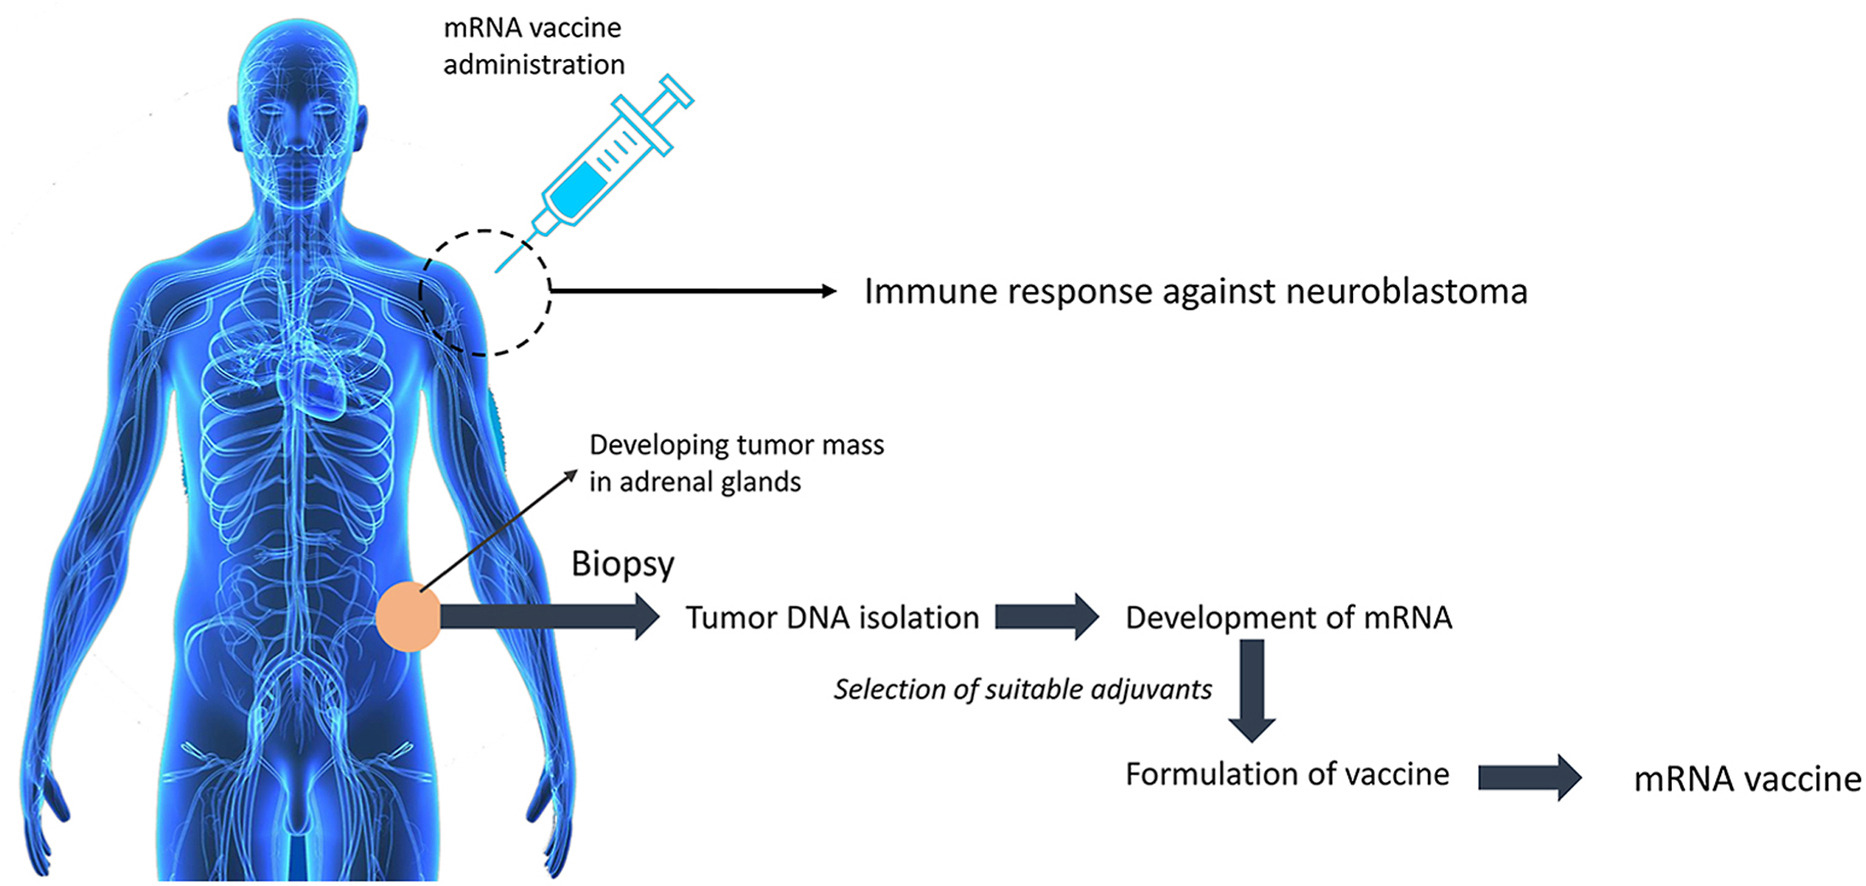 Immunotherapy for neuroblastoma using mRNA vaccines